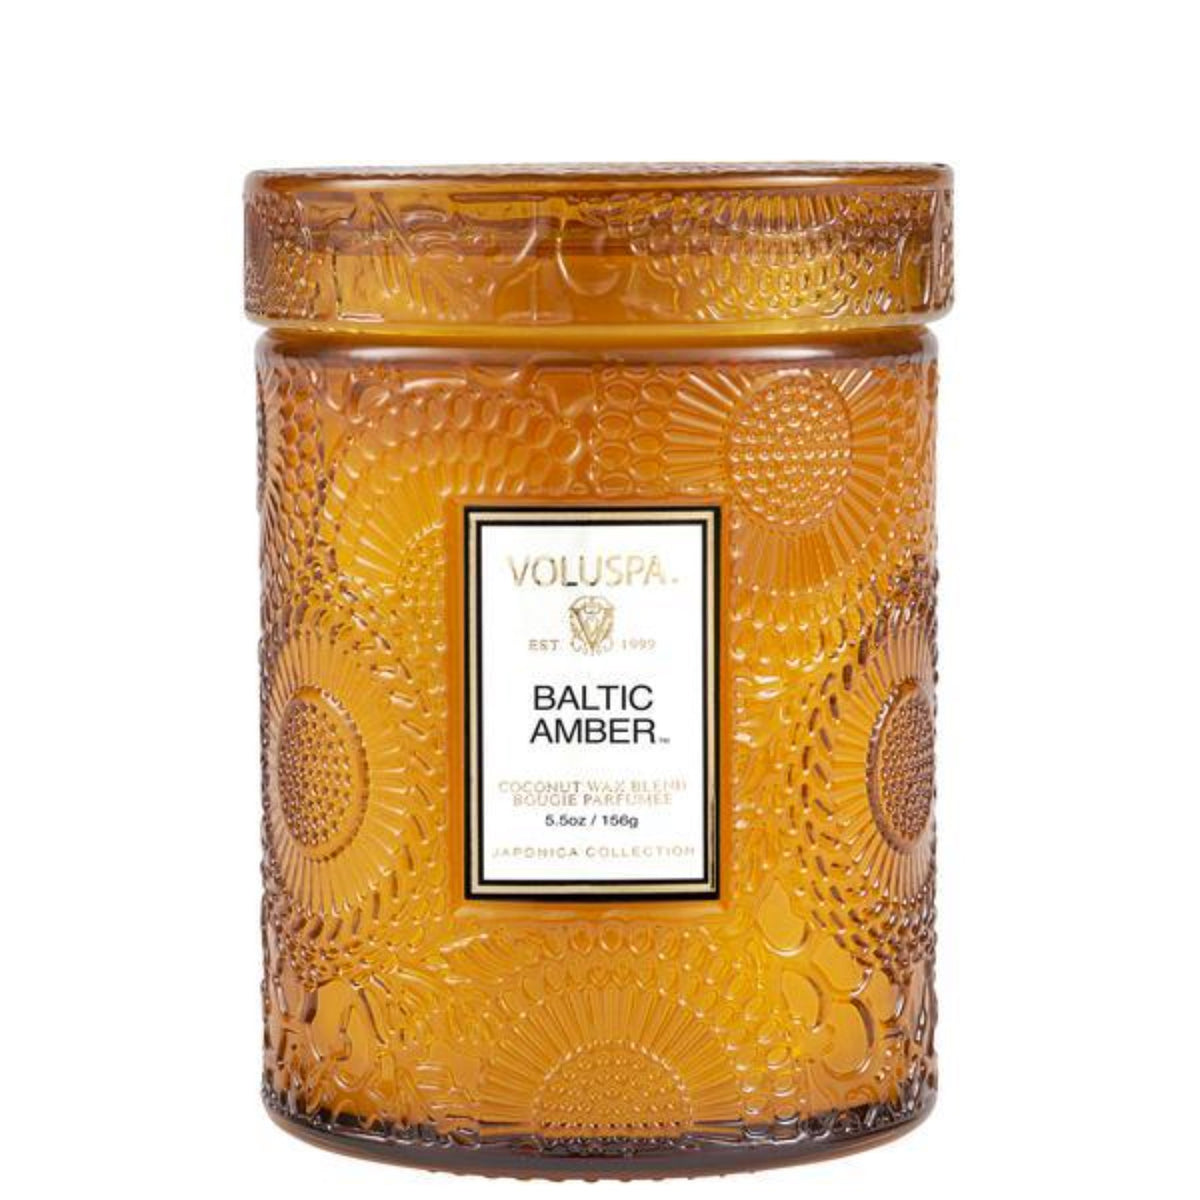 Volupsa: Baltic Amber Small Jar Candle